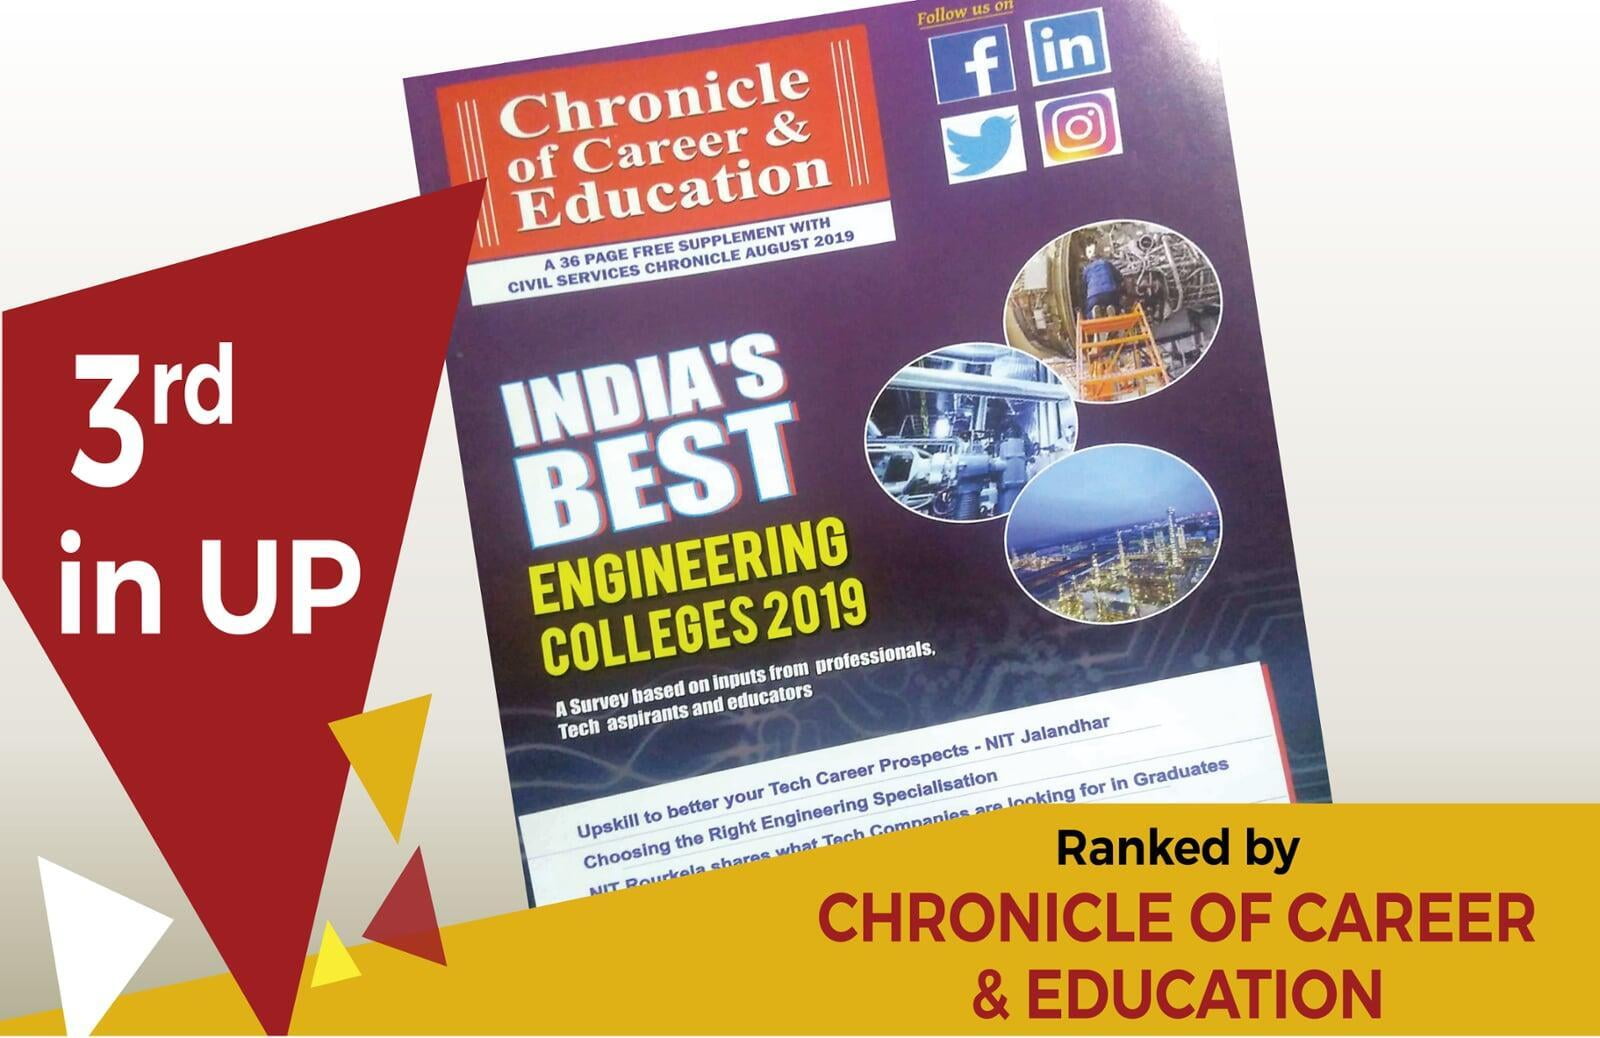  Ranked 3rd in Uttar Pradesh by Chronicle of Career & Education.